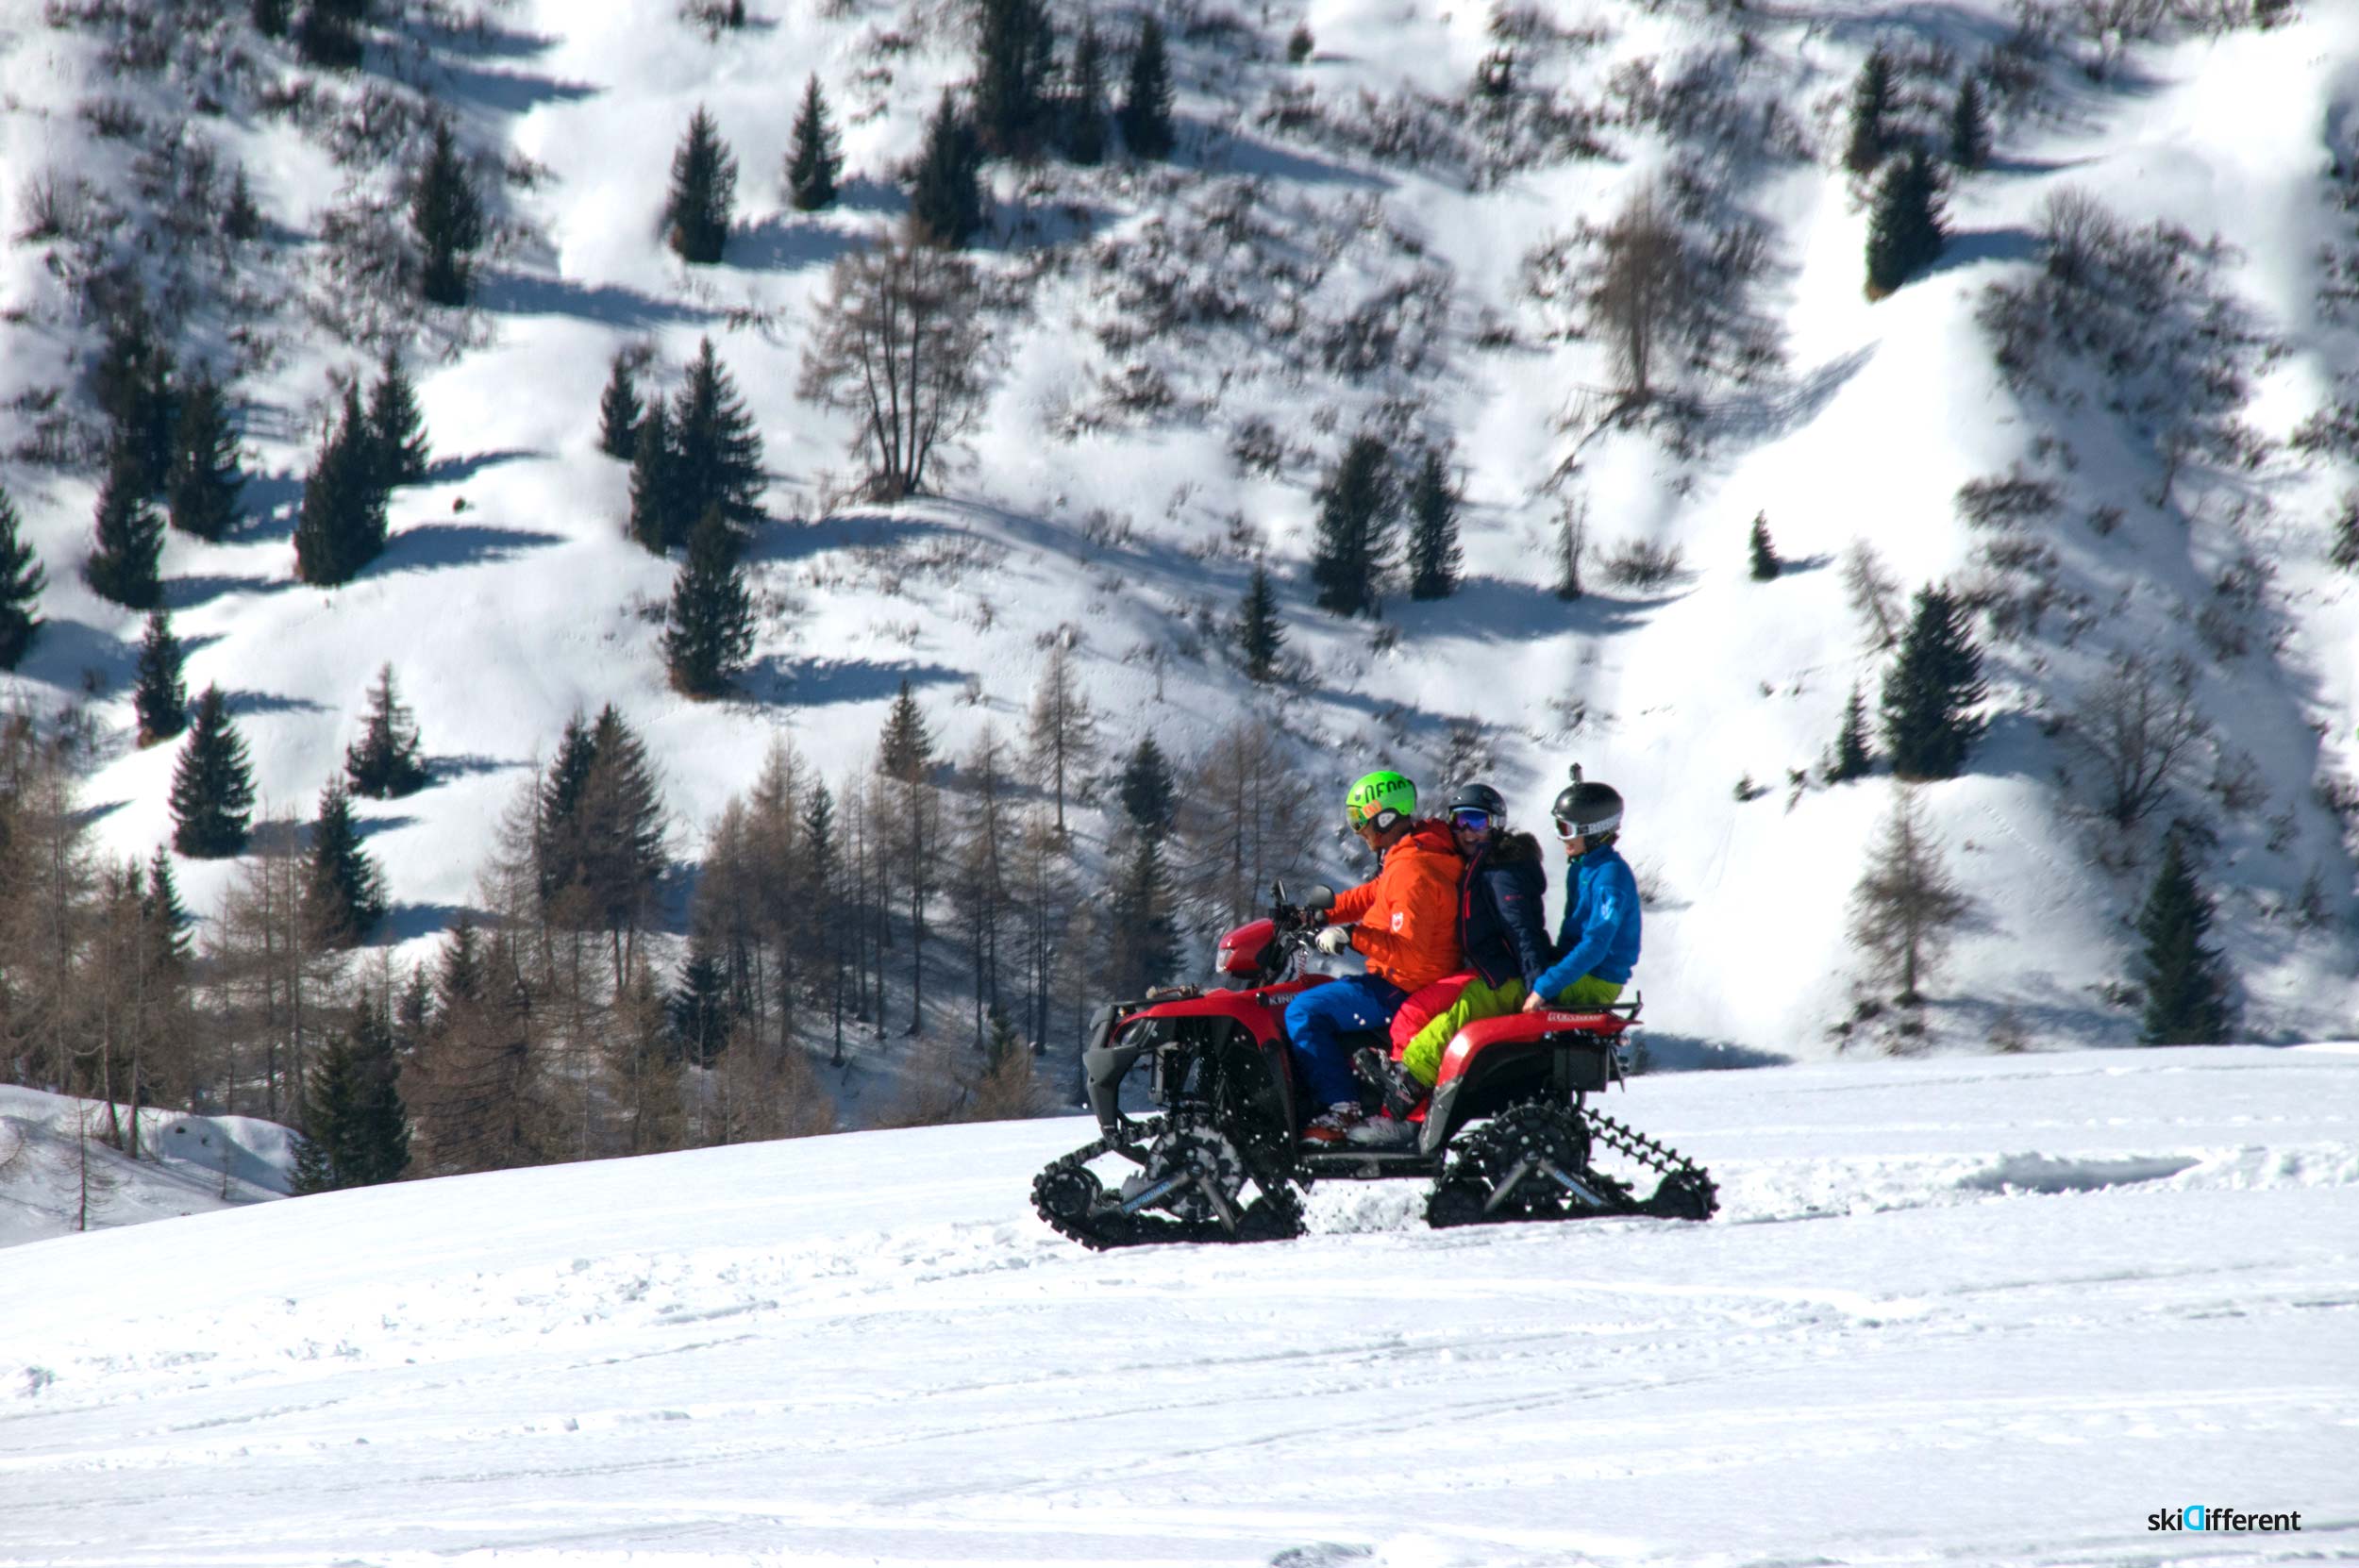 Skidifferent enjoy quad